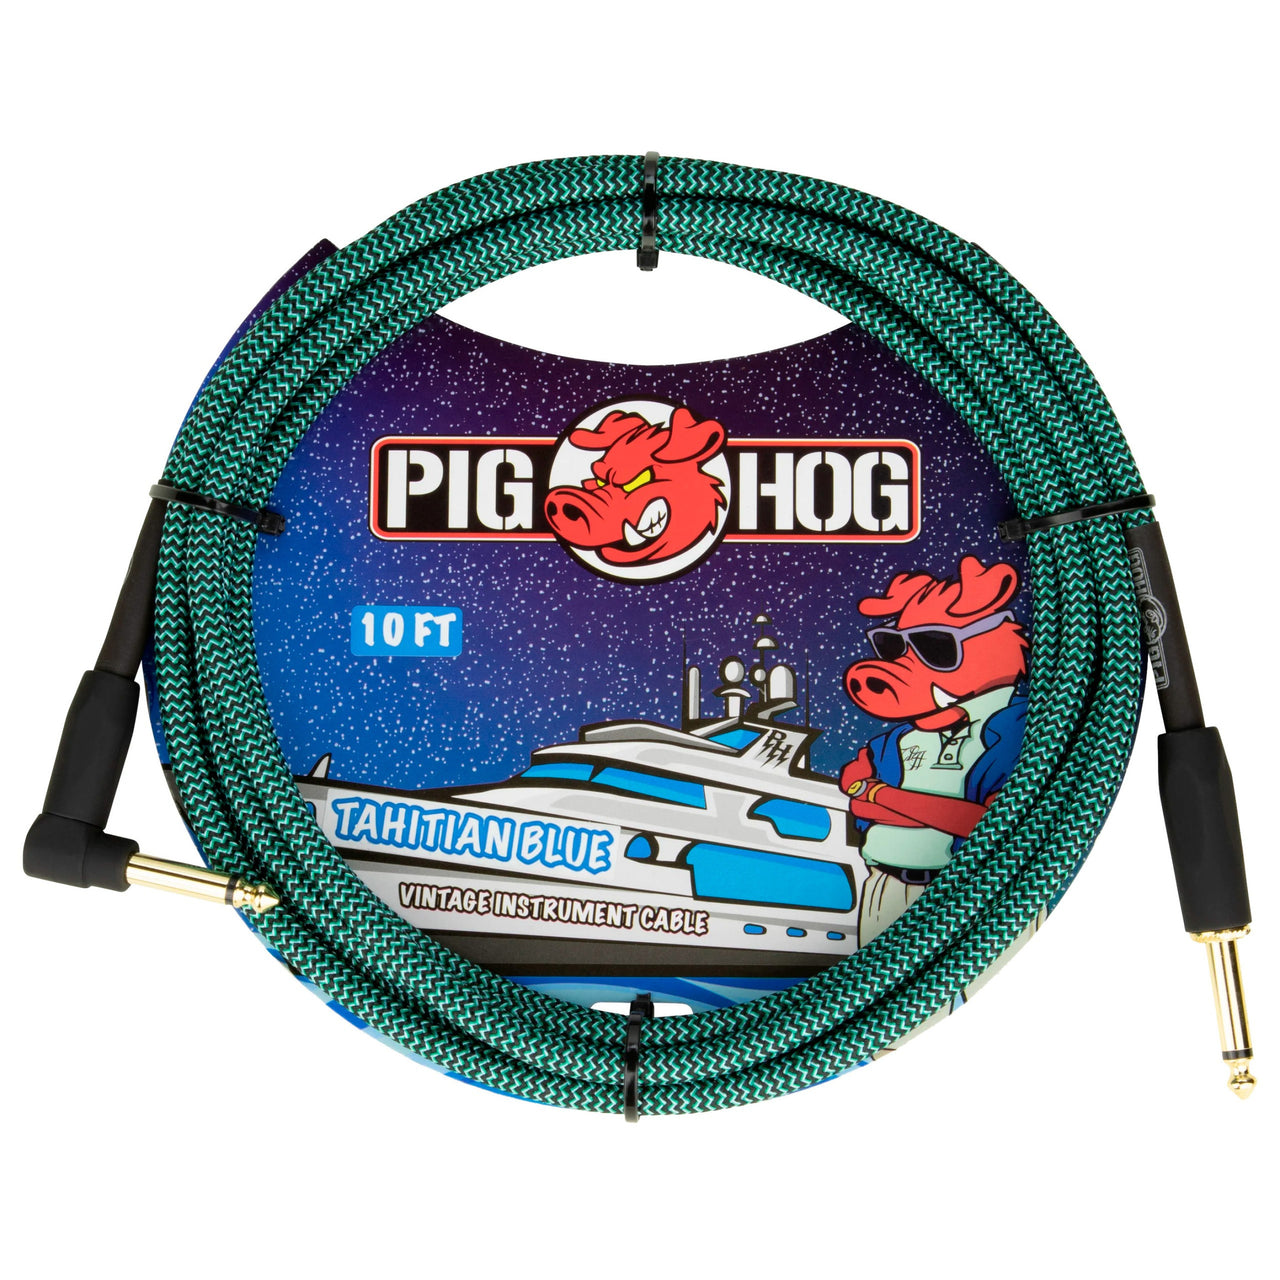 Cable Pig Hog P/instrumento Plug A Plug L Tahitian Blue 3m, Pch10tabr